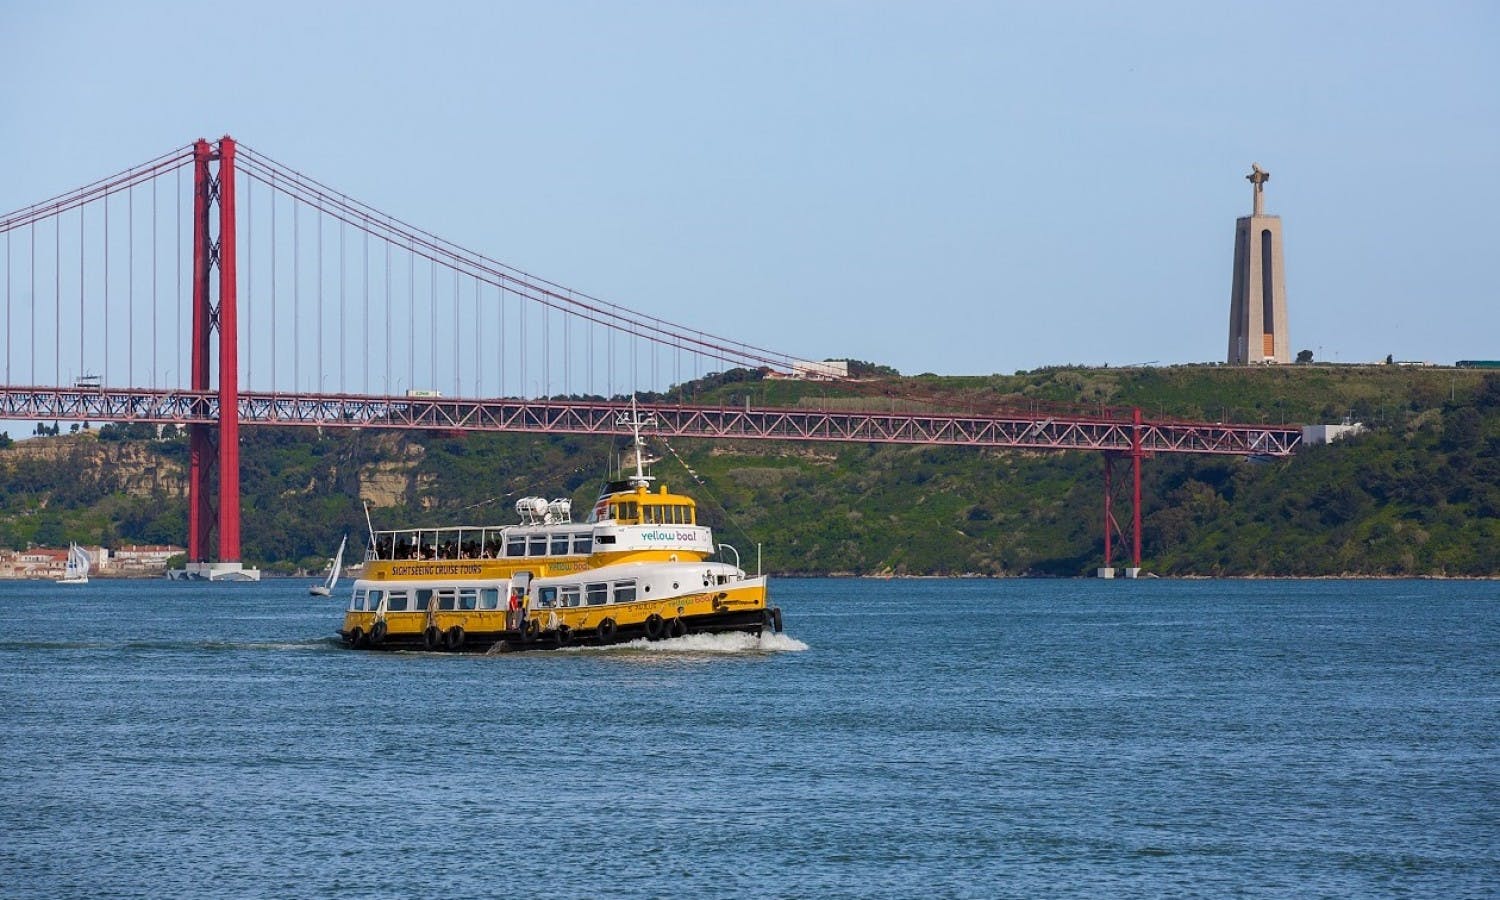 Crucero turístico en barco Yellow Boat en Lisboa